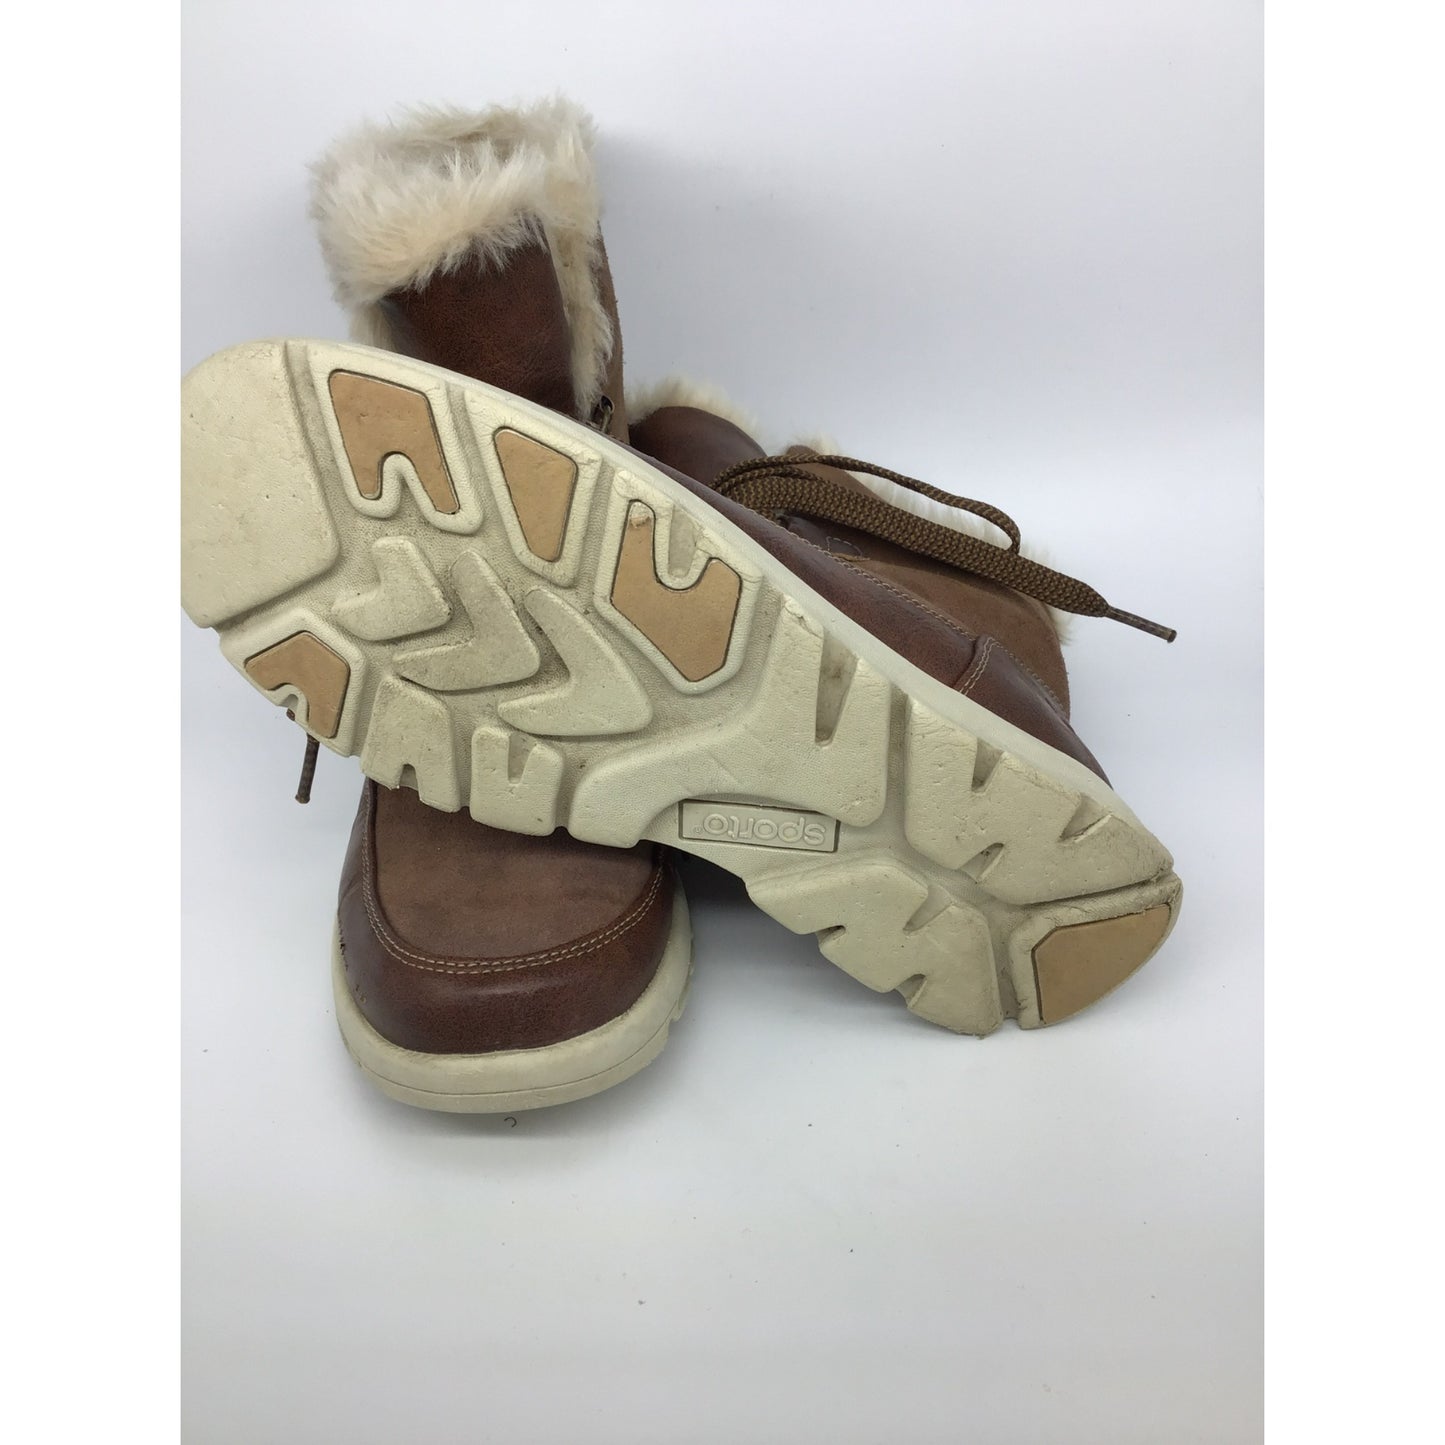 Women’s Leather & Fur Snow Boots